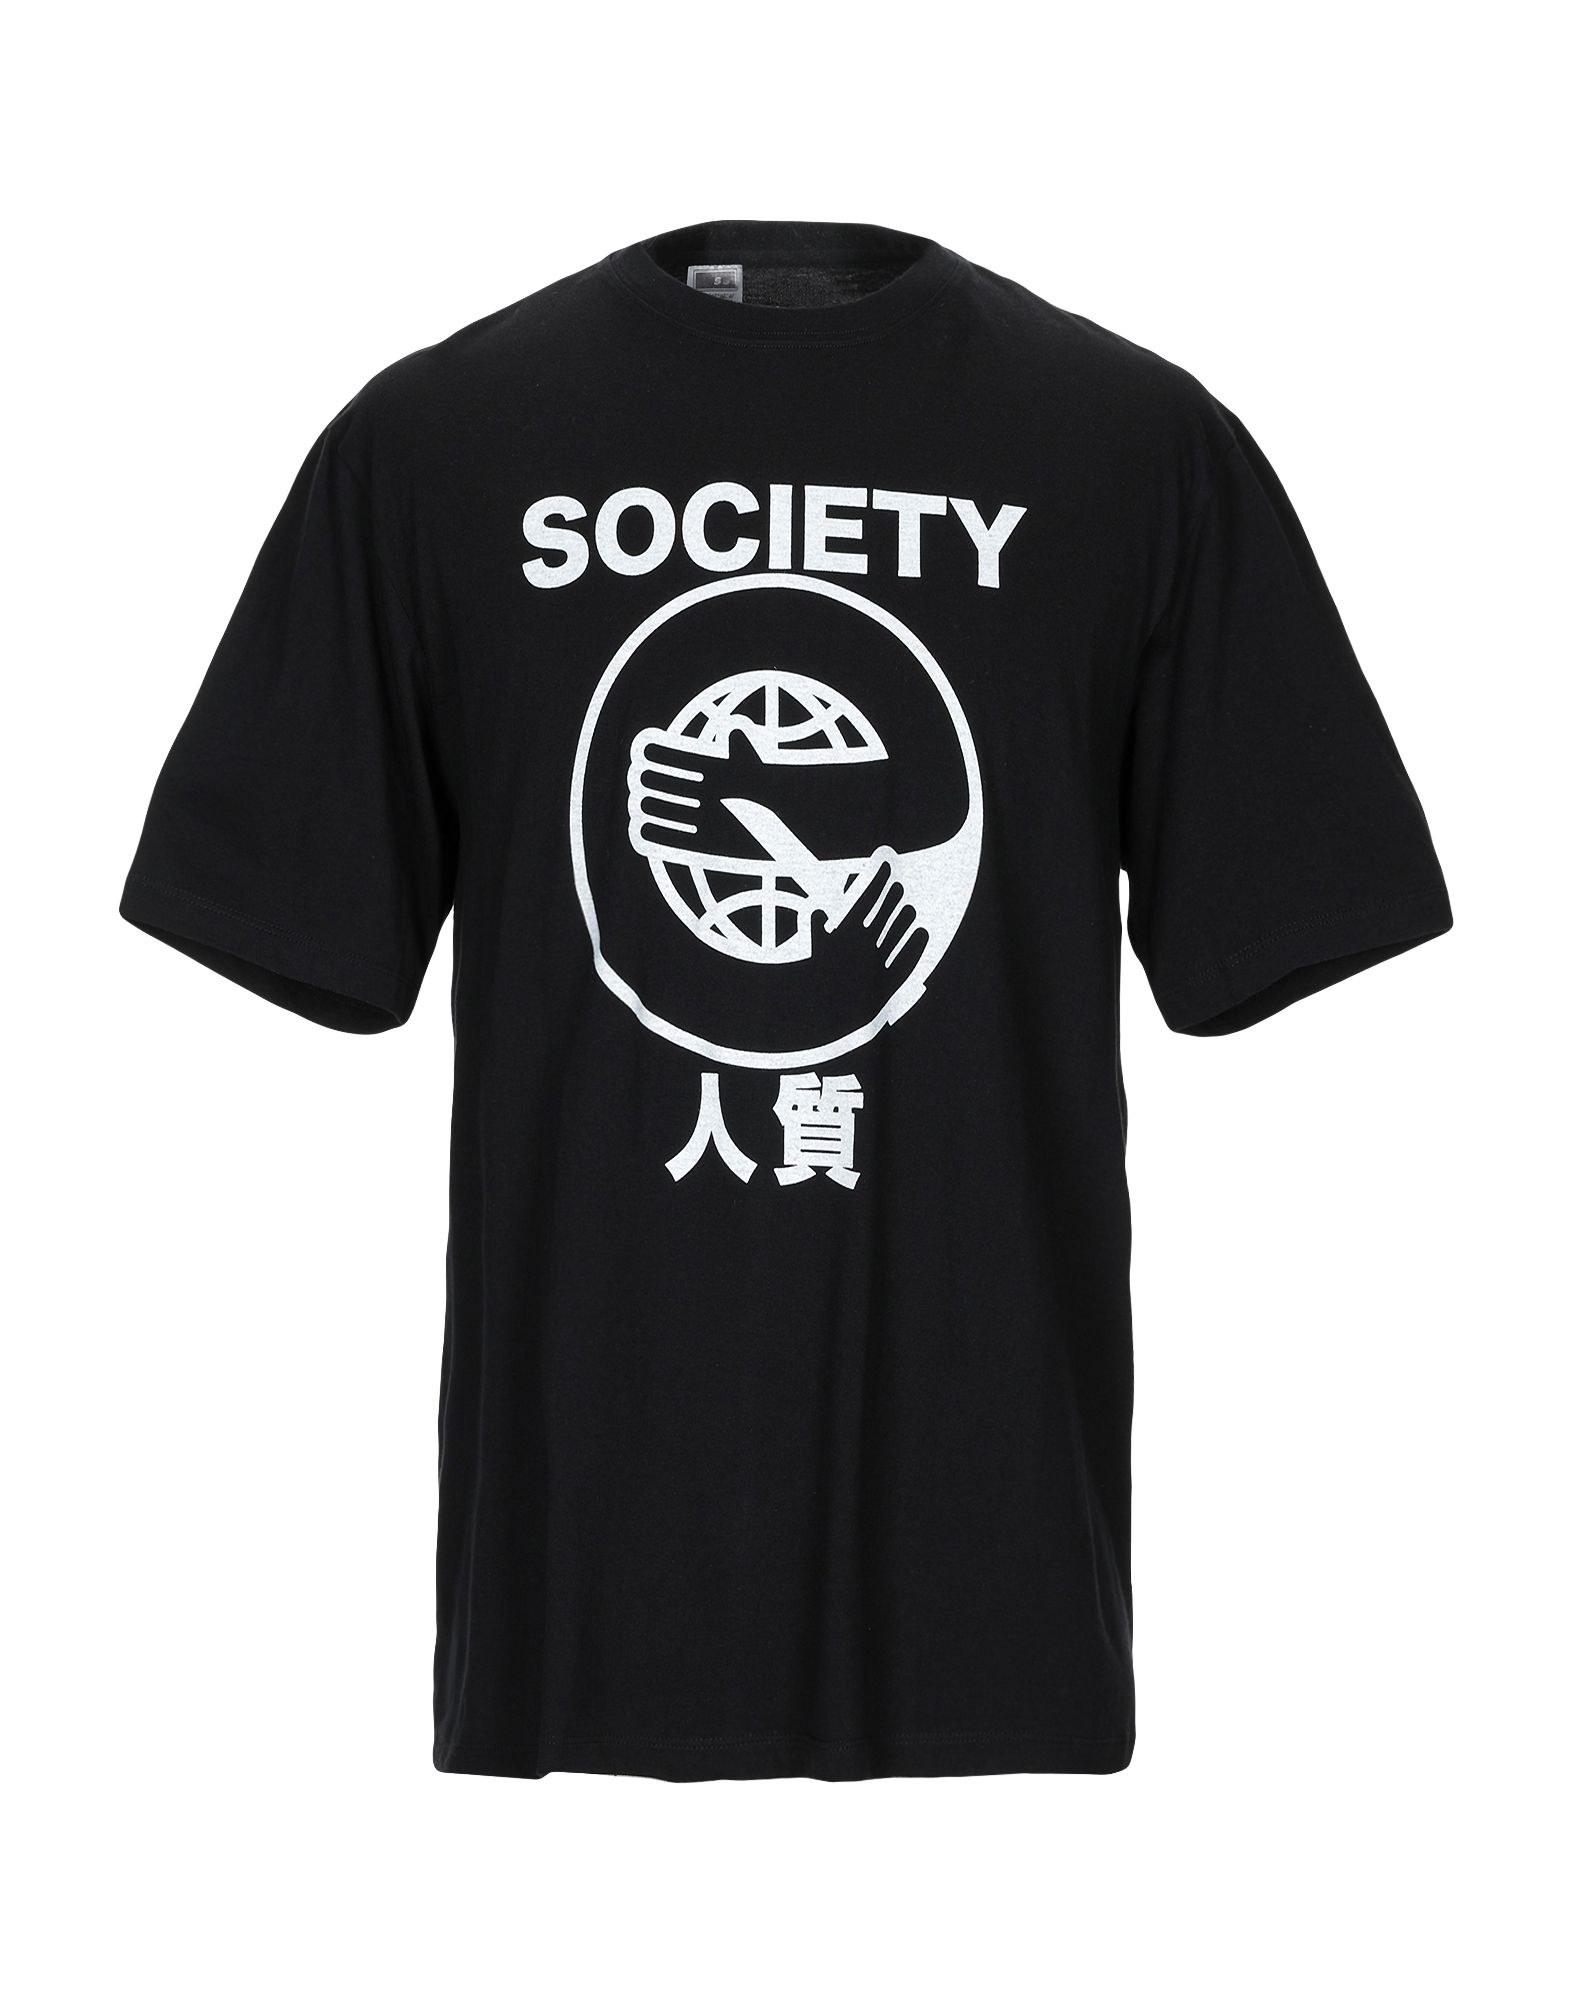 Society купить. Футболка Lost Society. Pothead Society футболка. Foreign Society футболка. Legends North Shore so Siti футболка.